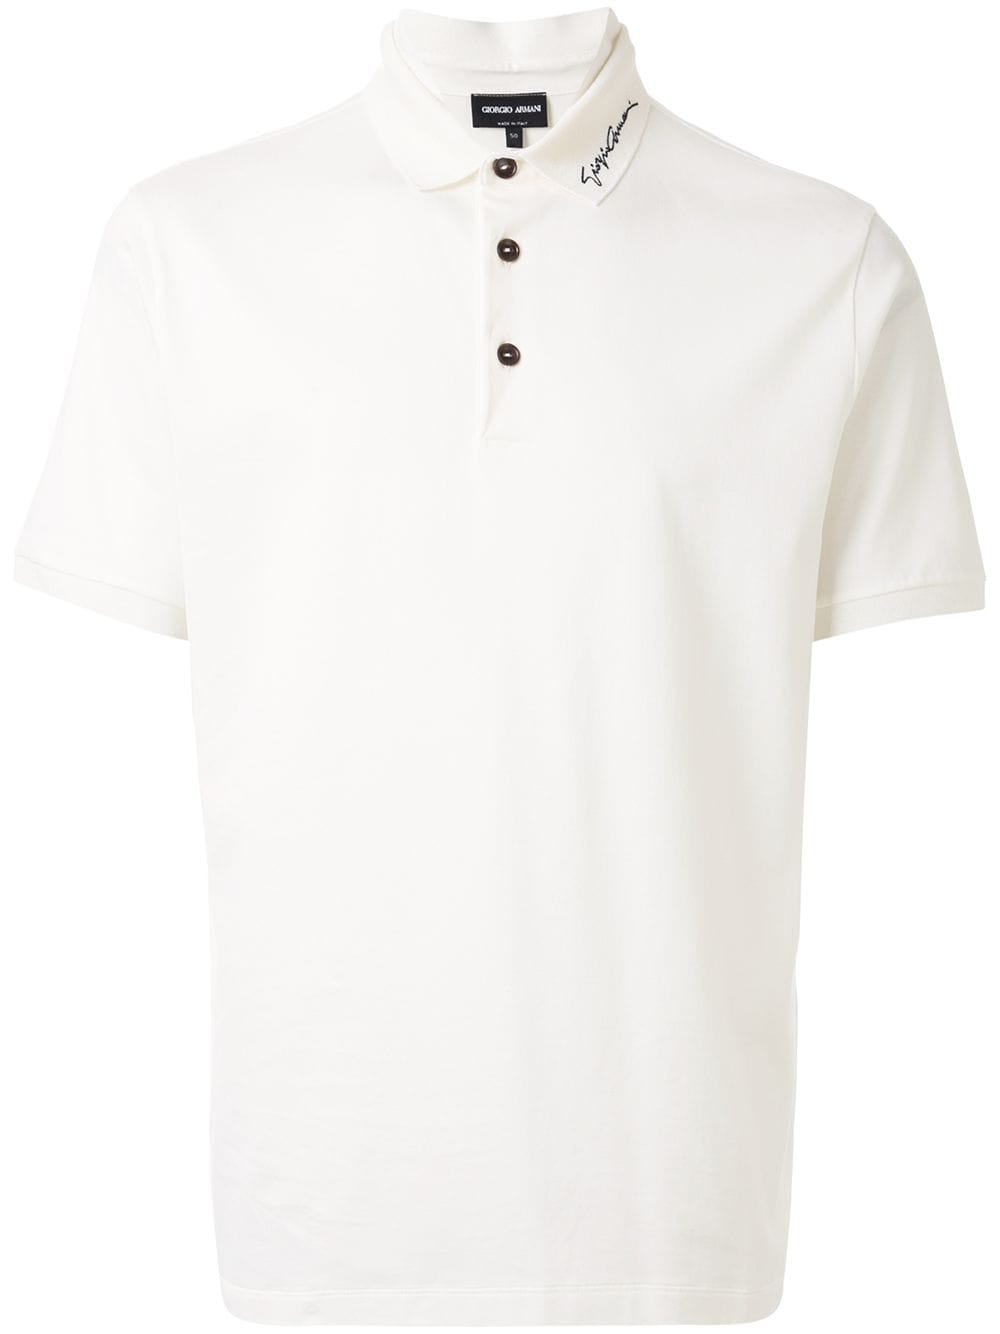 Giorgio Armani Polo T-Shirt Ss20 